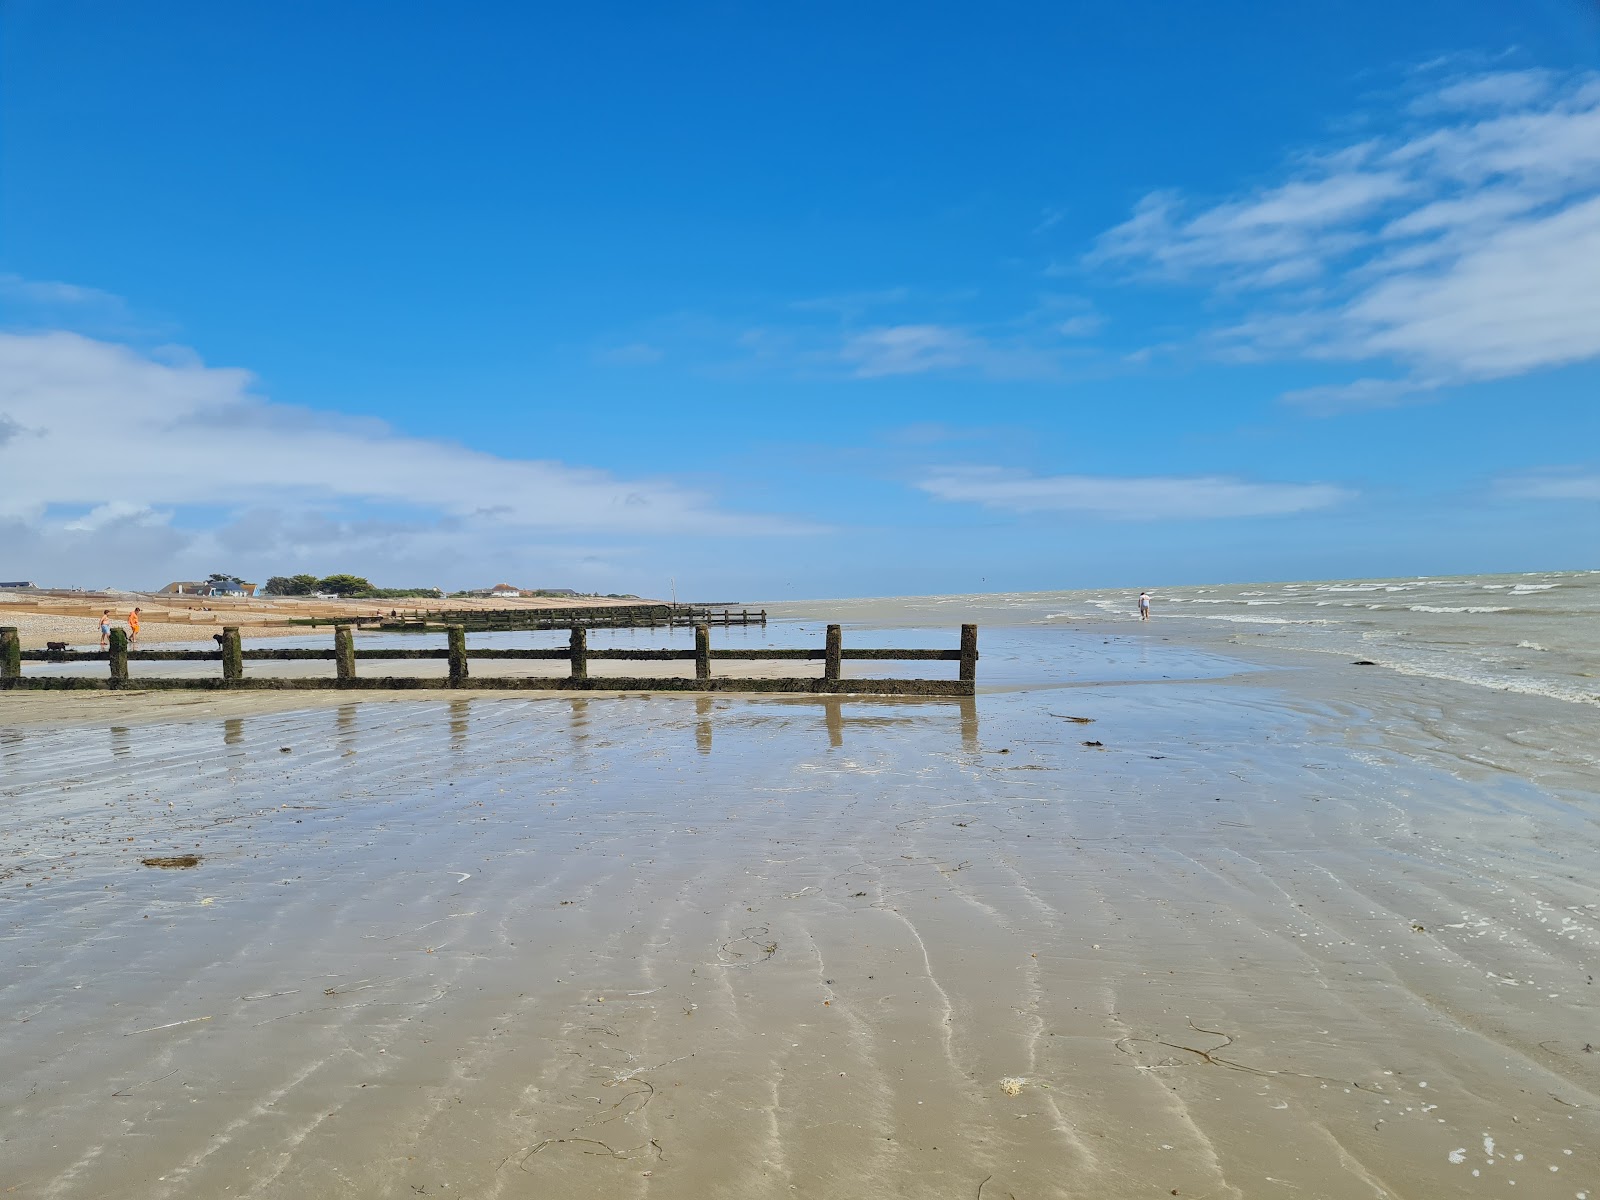 Foto de Praia de Ferring - lugar popular entre os apreciadores de relaxamento